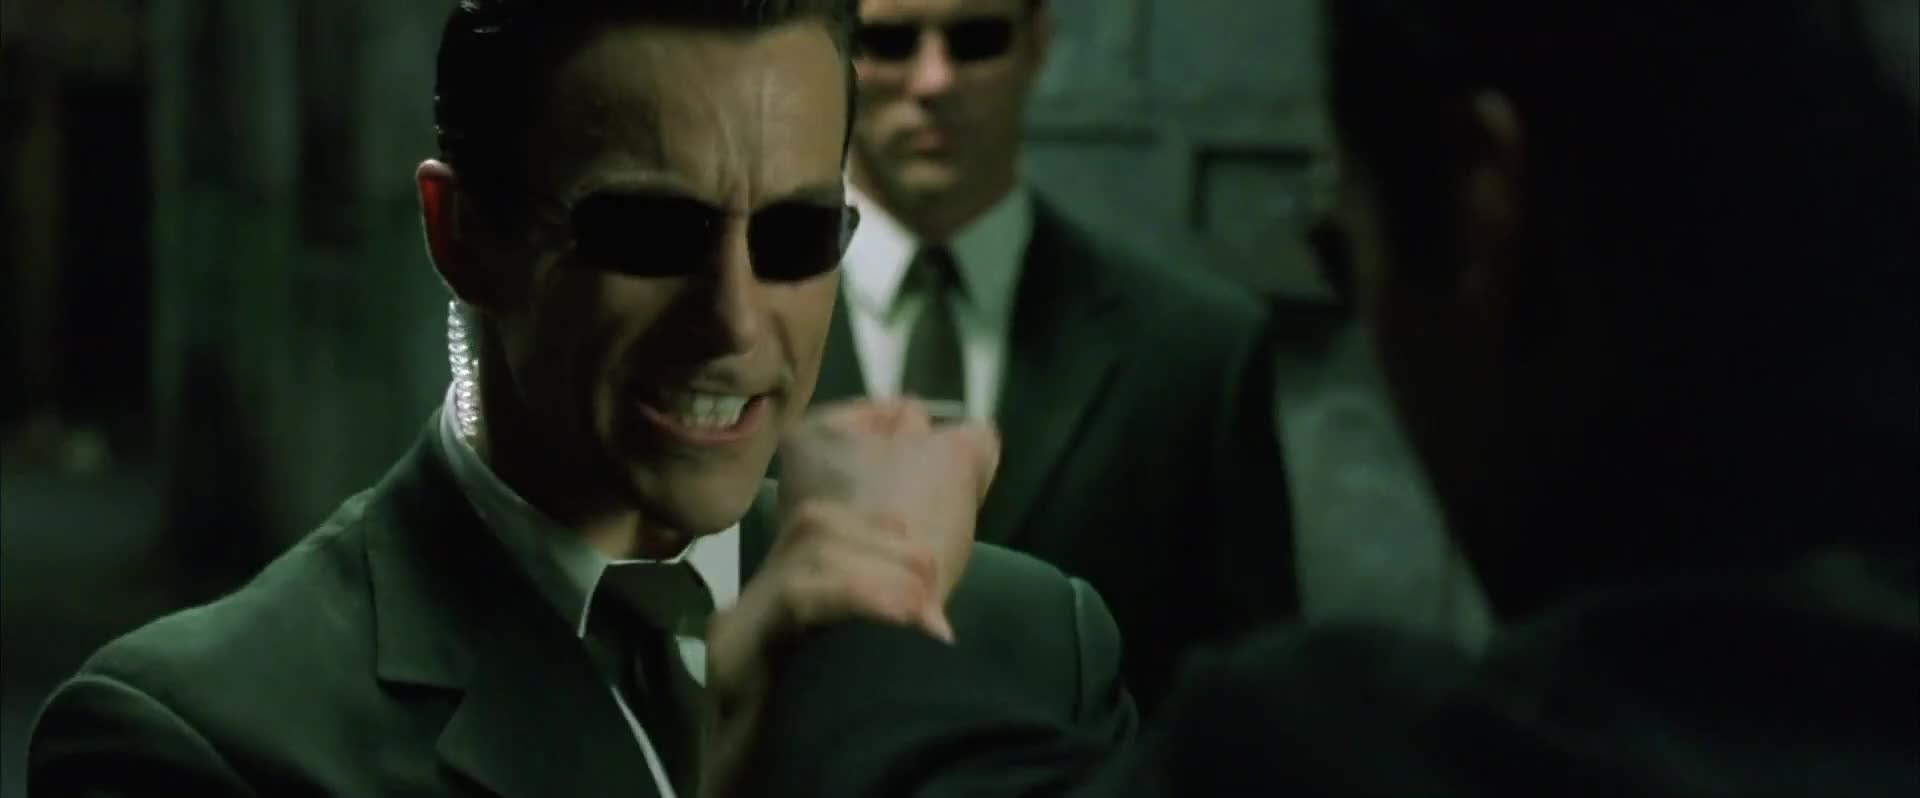 The Matrix Reloaded เดอะ เมทริกซ์ รีโหลดเดด สงครามมนุษย์เหนือโลก (2003)